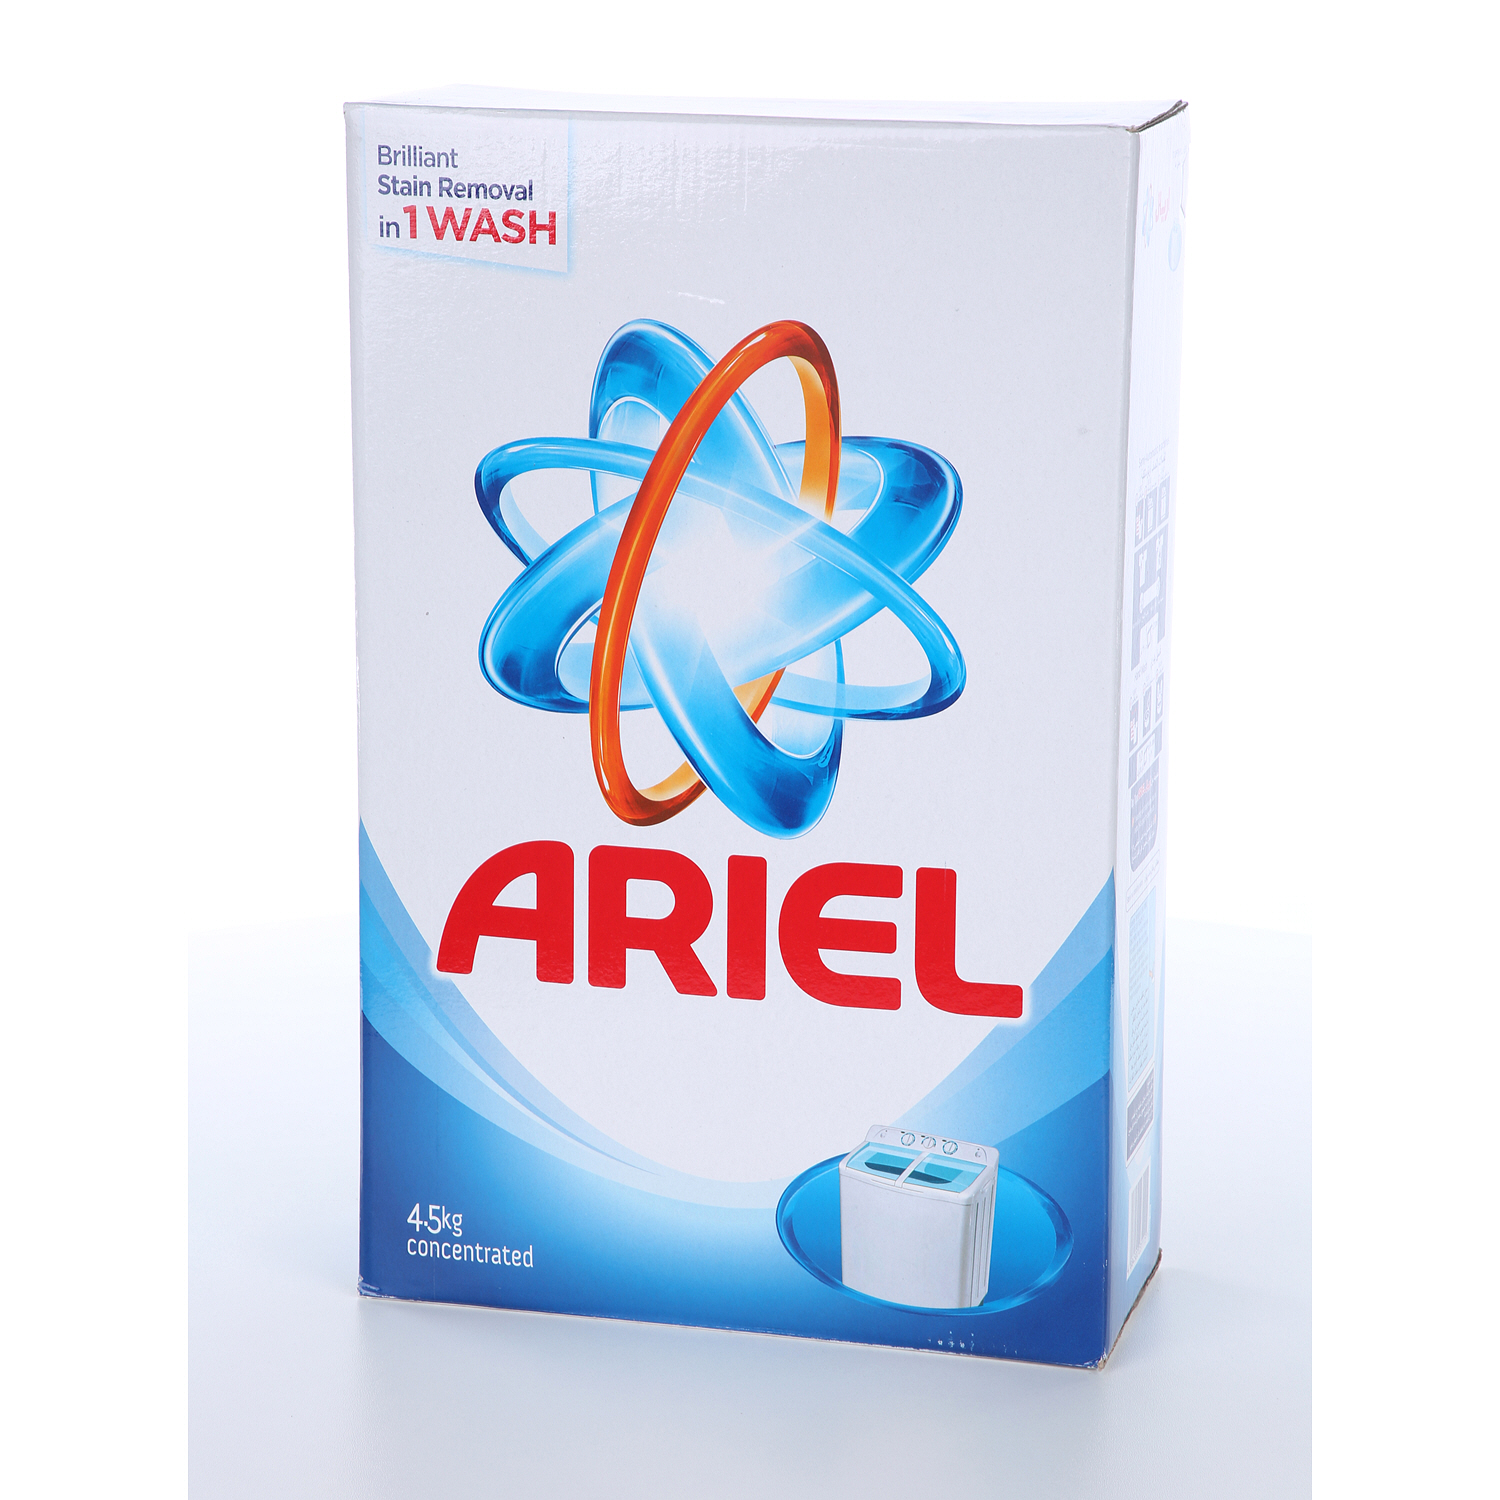 Ariel Detergent Concentrated Blue 4.5Kg